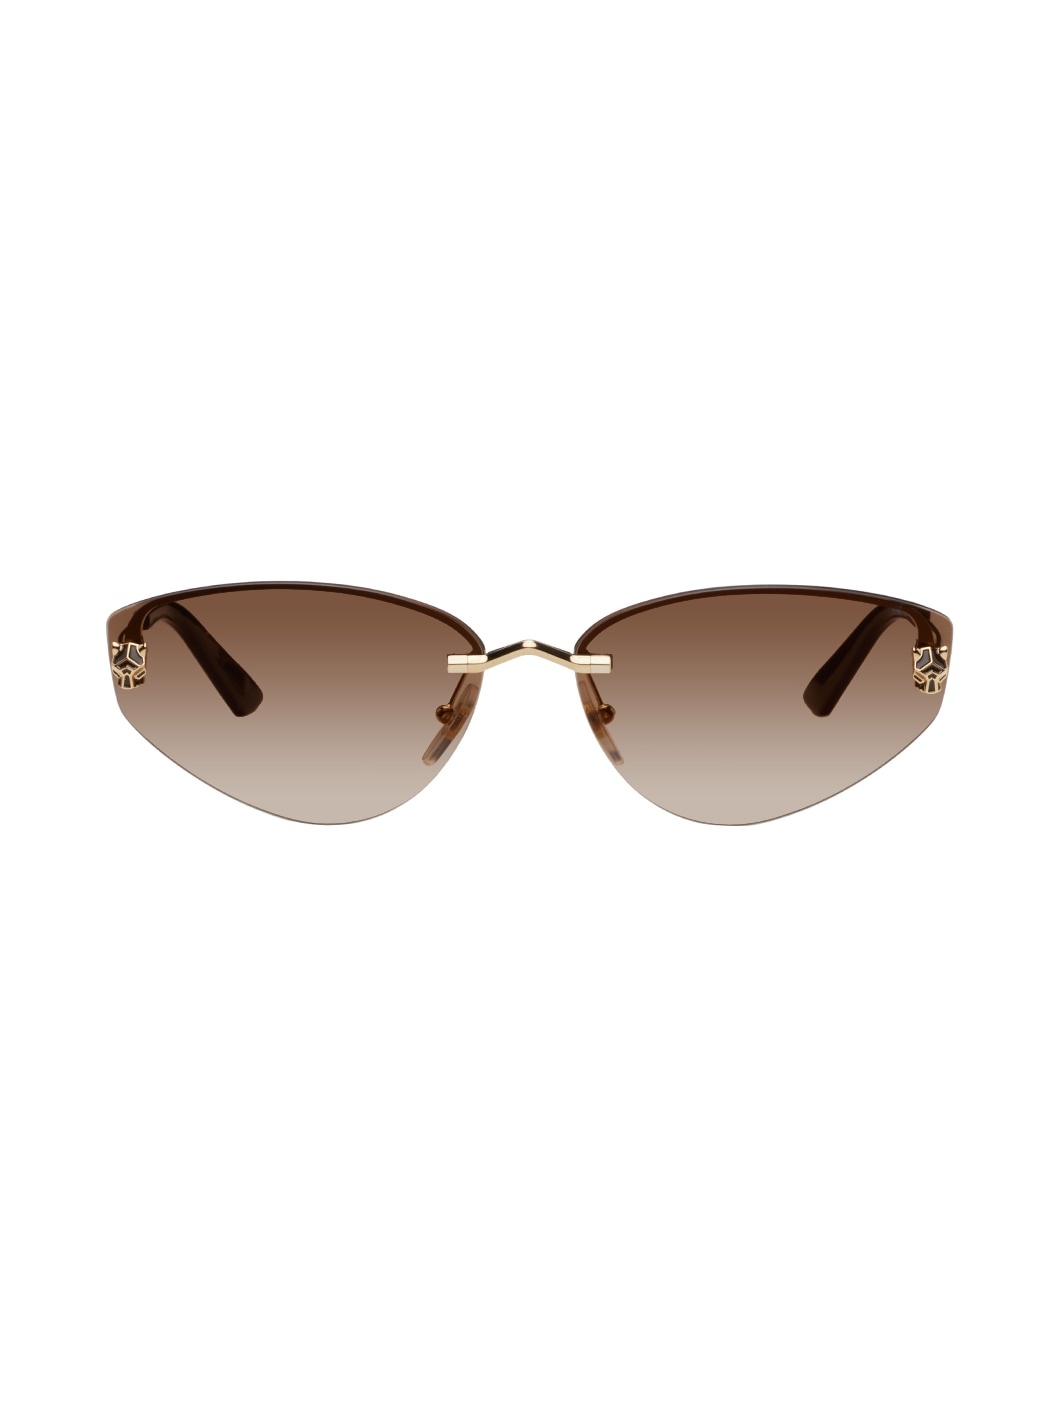 Gold Cat-Eye Sunglasses - 1